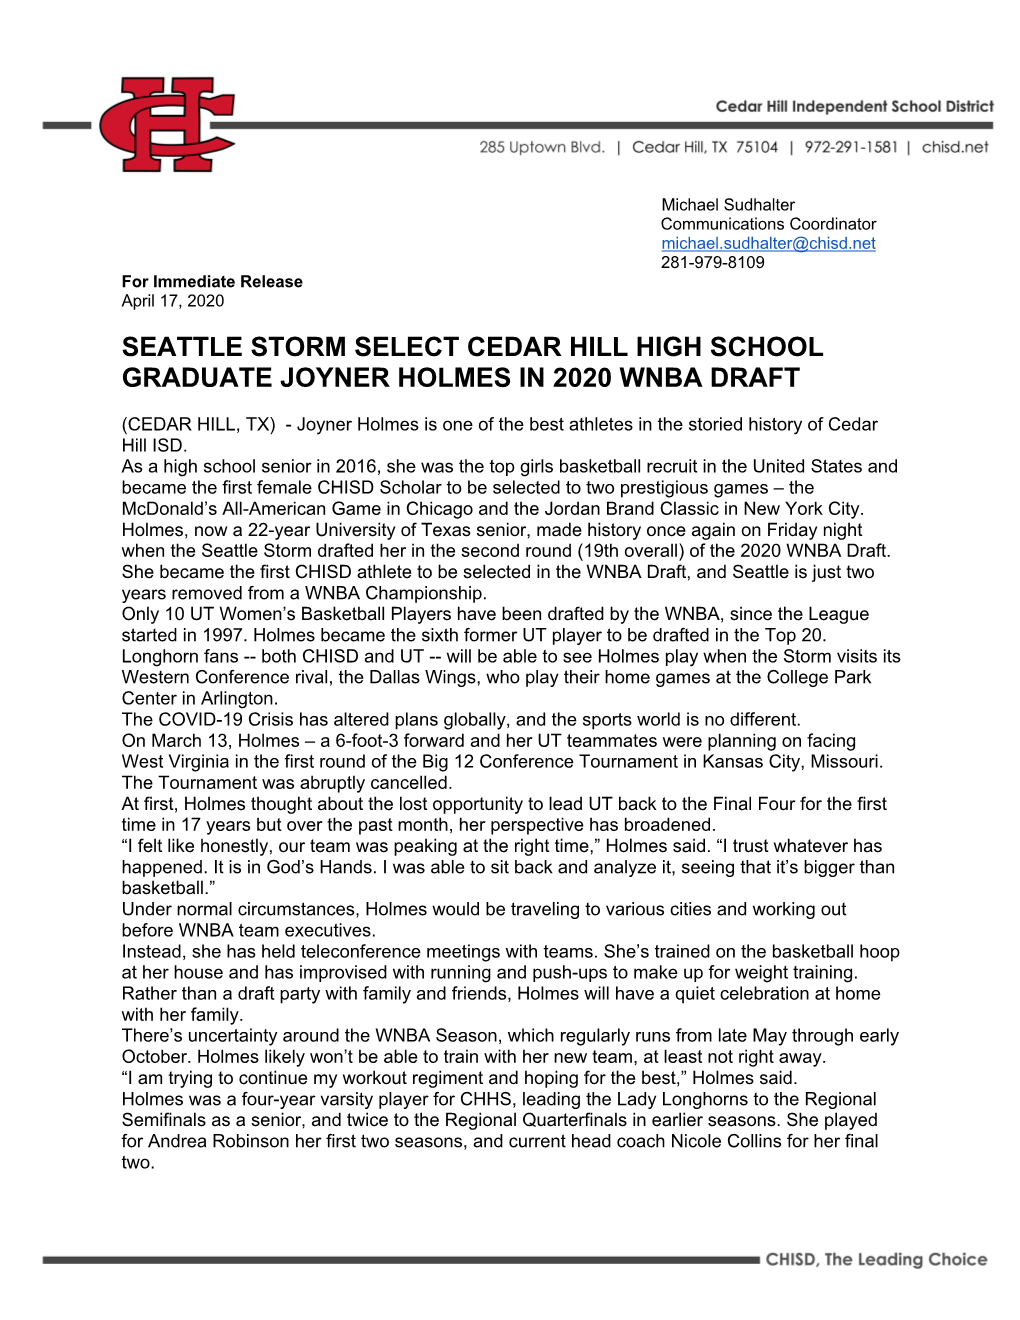 Seattle Storm Select Cedar Hill High School Graduate Joyner Holmes in 2020 Wnba Draft